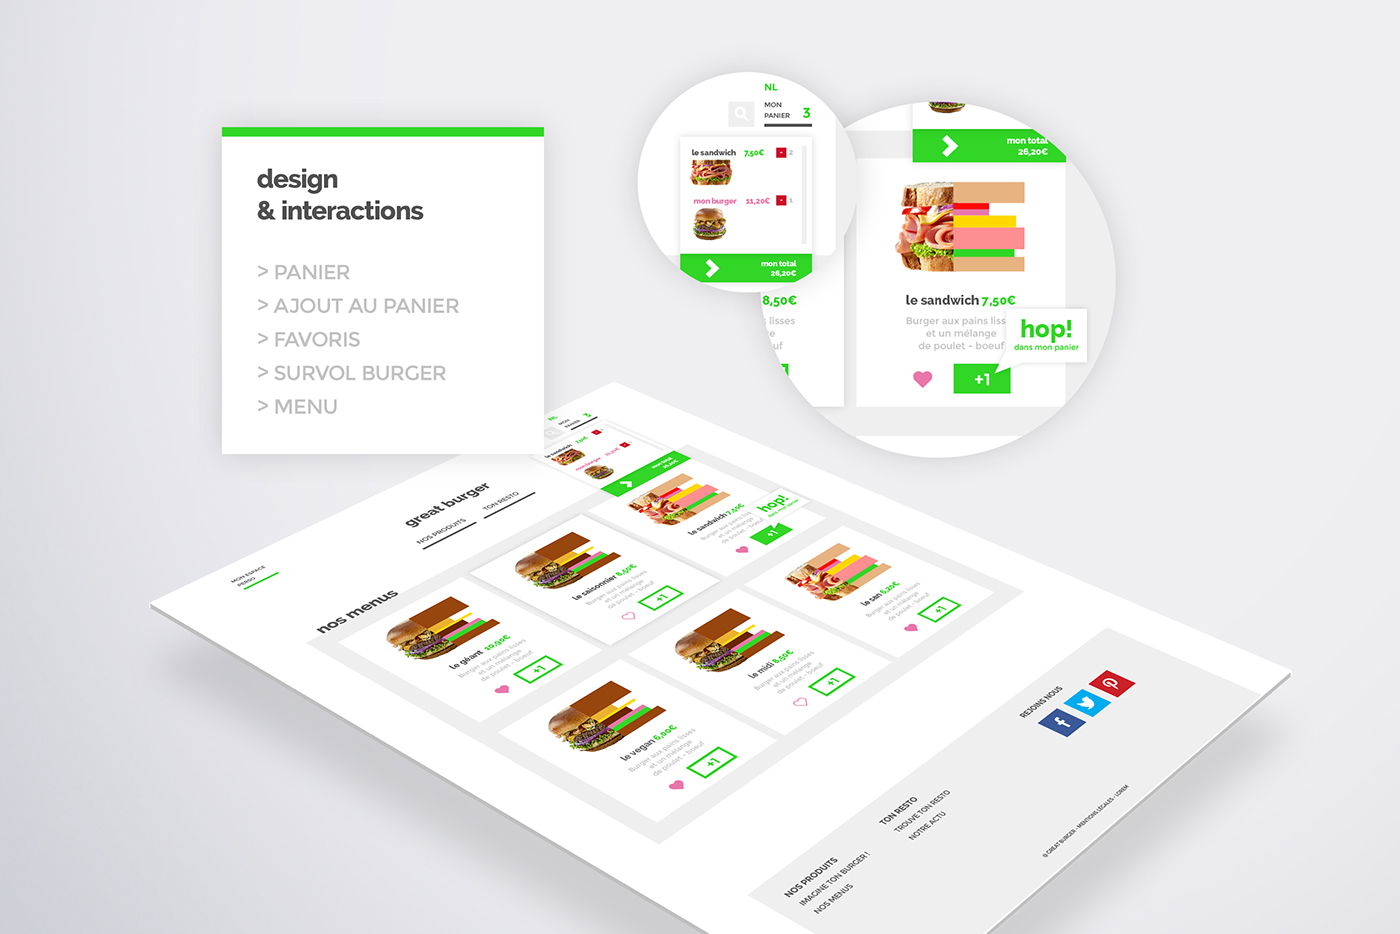 Web Design  Web design great burger burger Interface site web site Imagine customiser Layout Mégane Mareschal